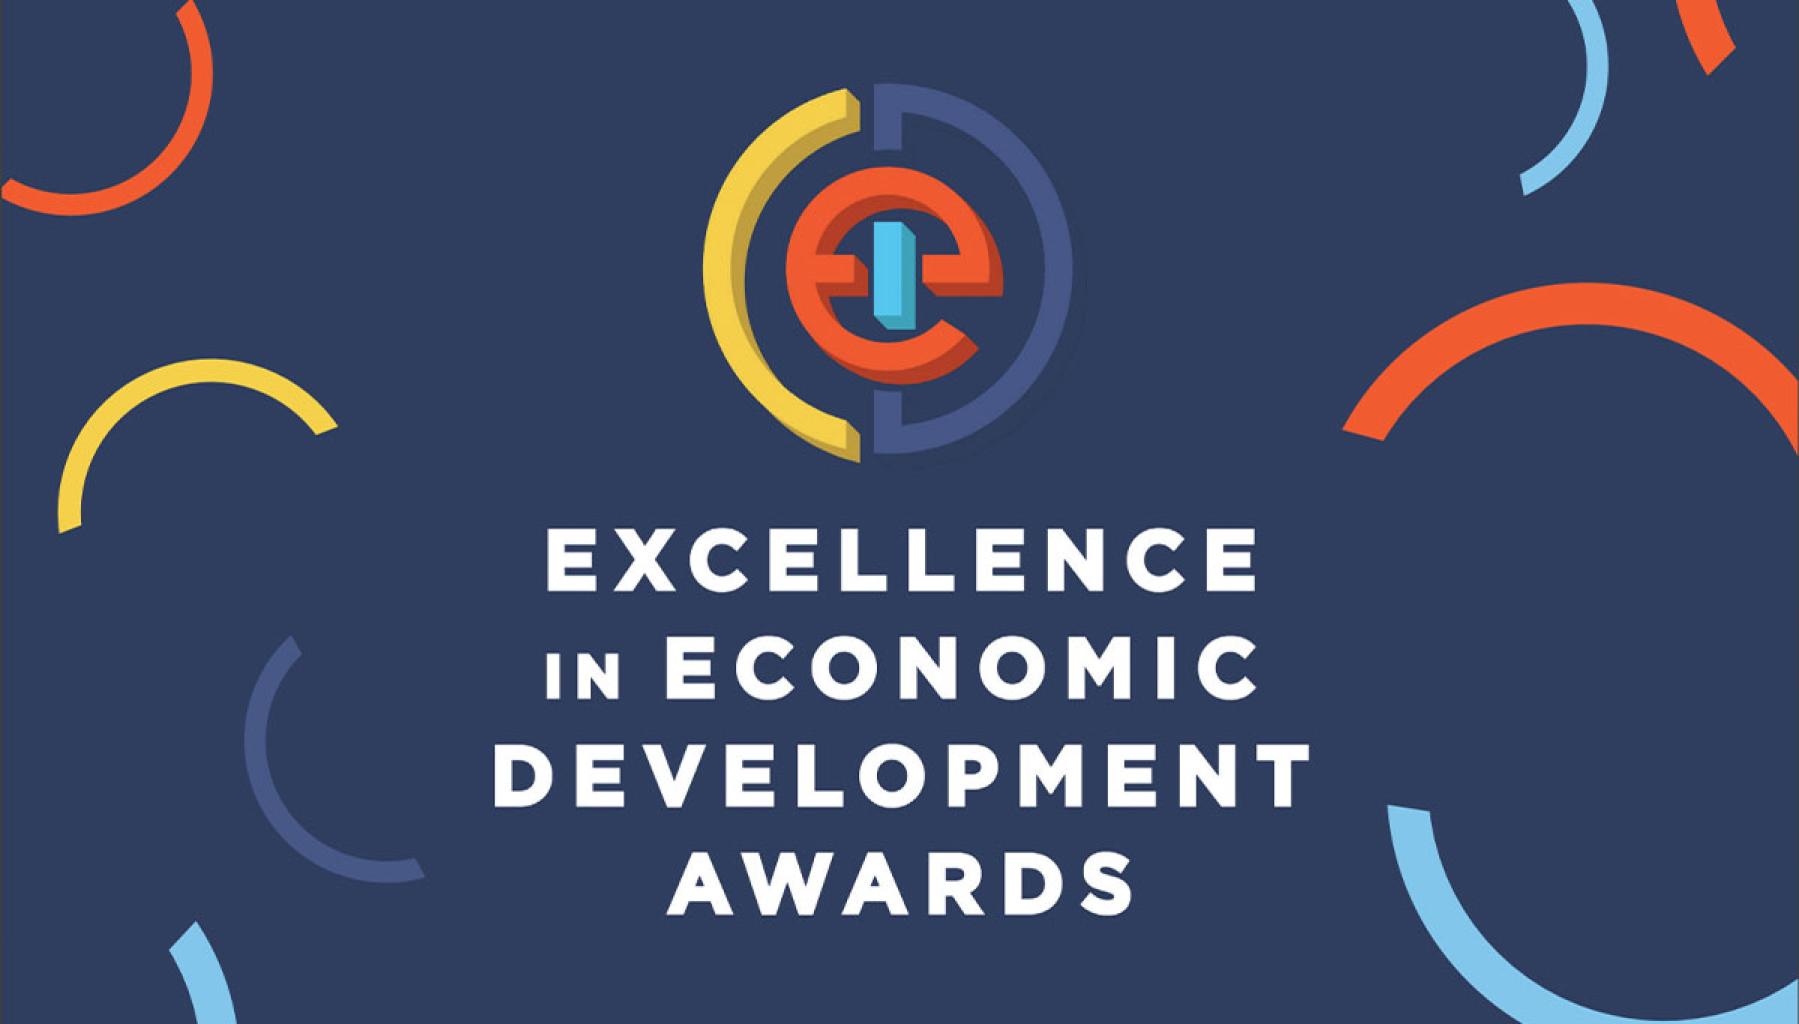 Excellence in Economic Development Awards